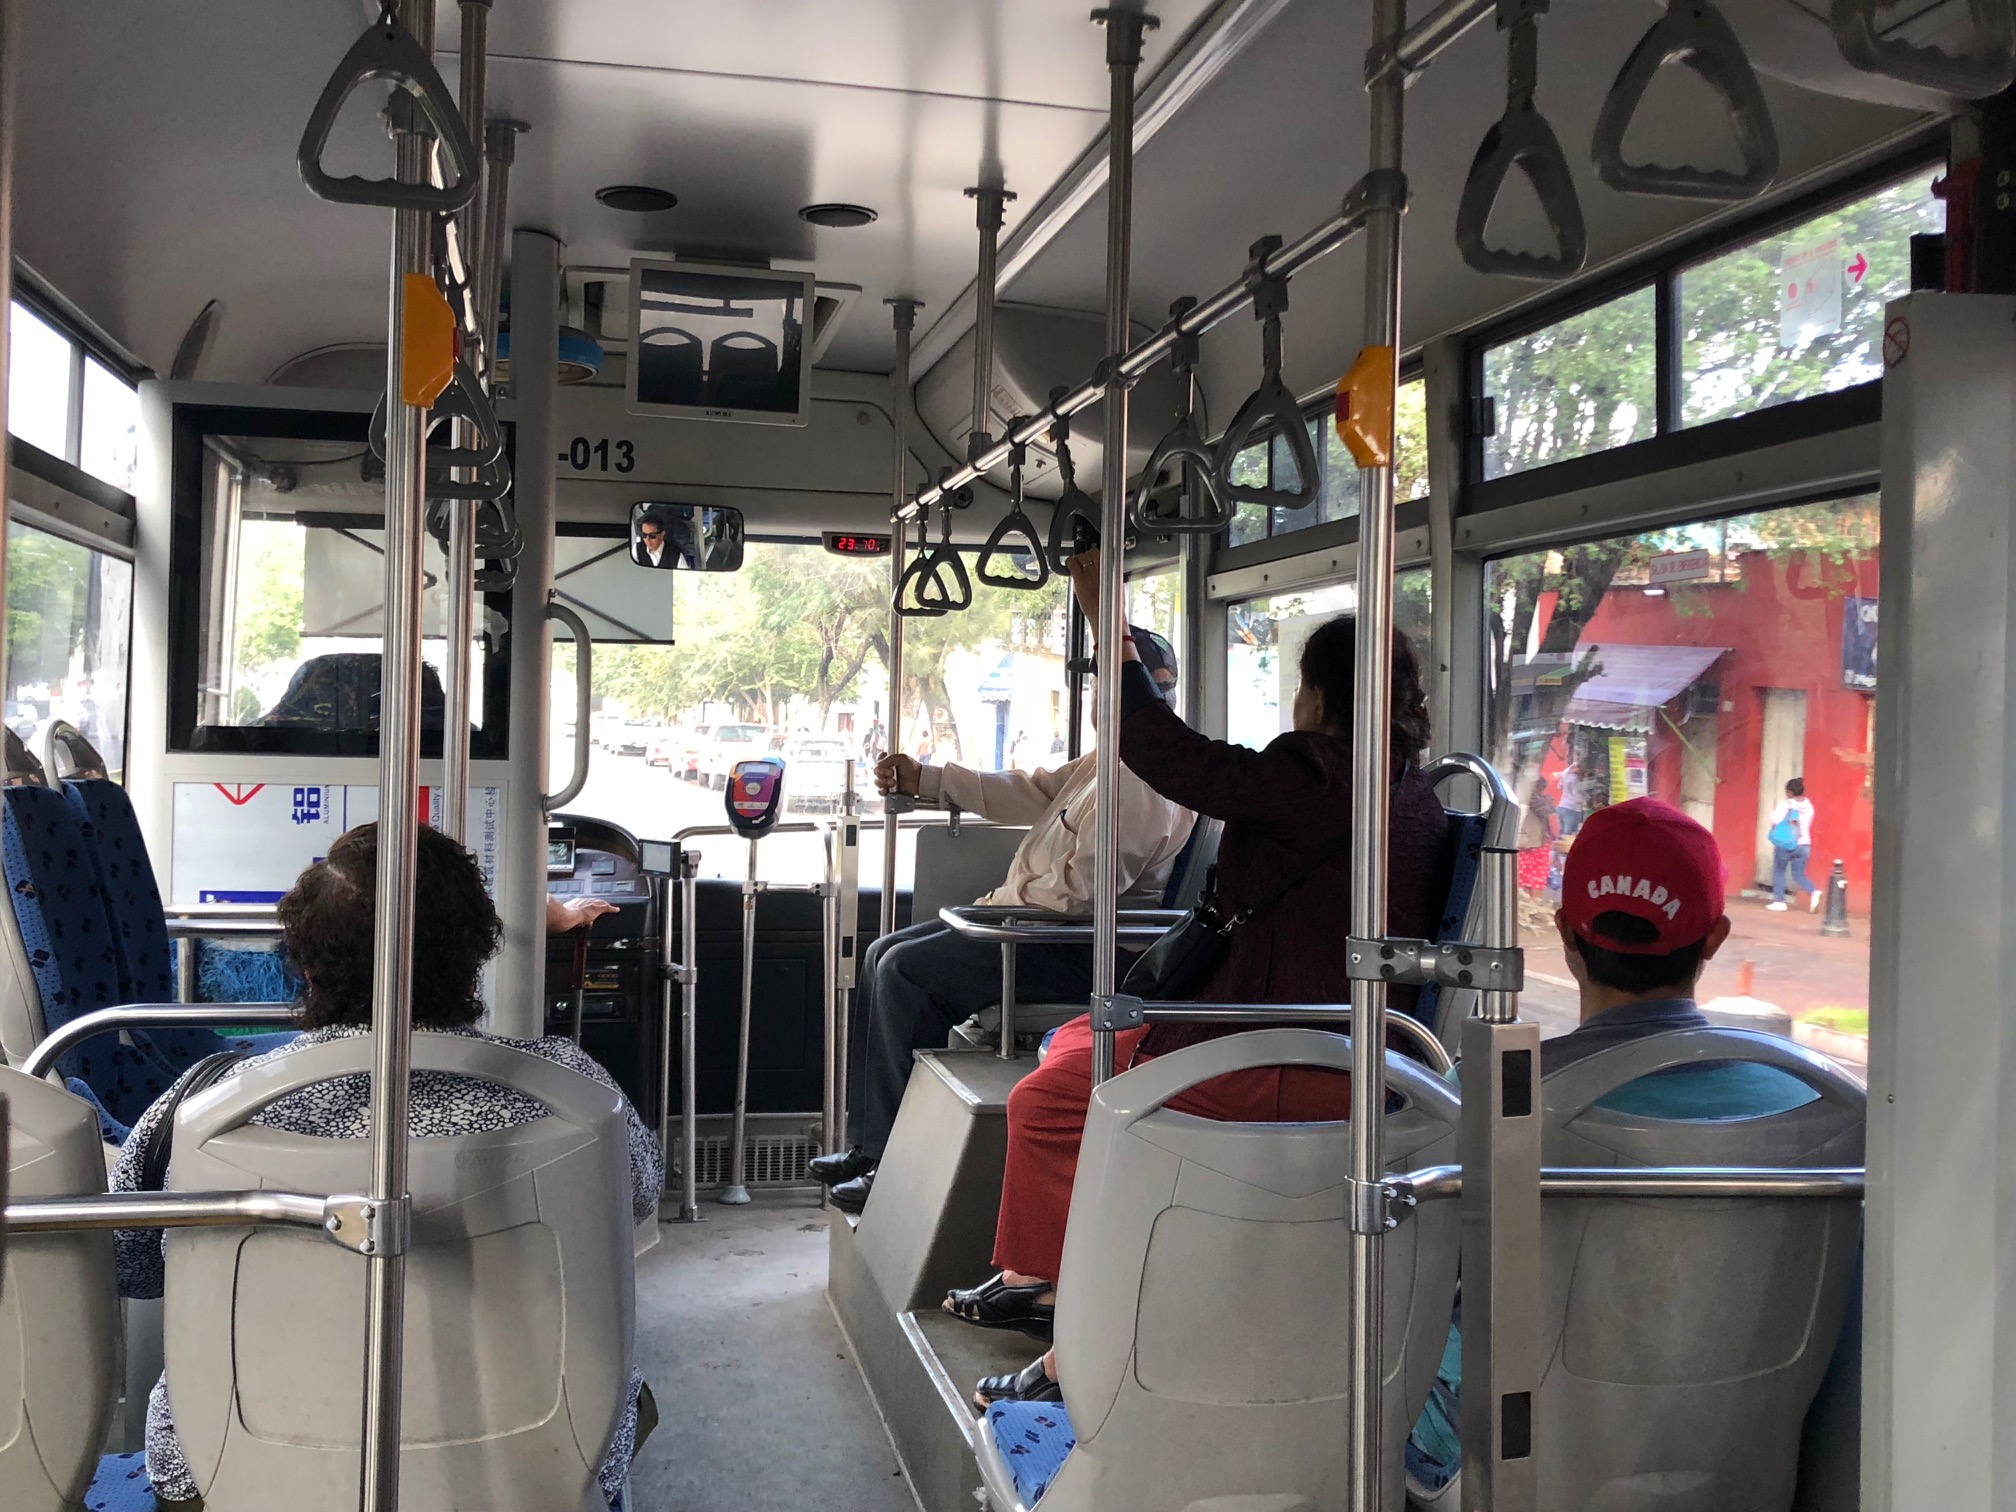  Tarifazo: sube a 11 pesos costo del transporte público en zona metropolitana